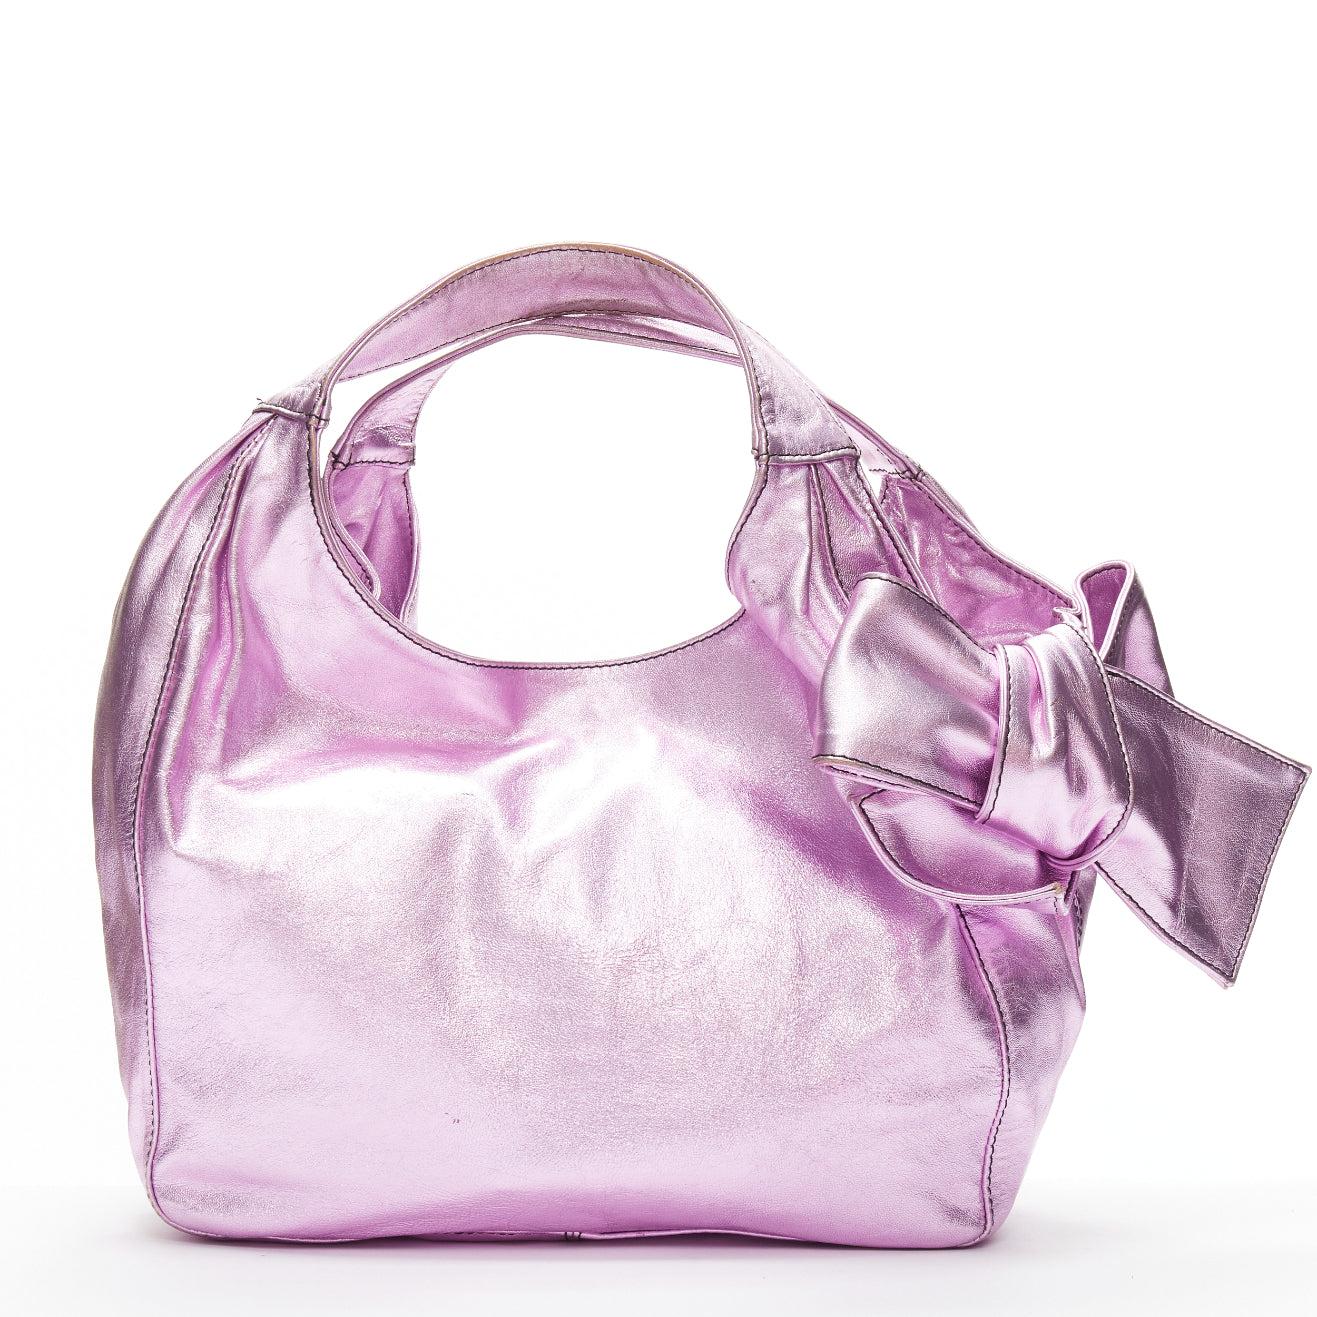 Women's VALENTINO GARAVANI metallic purple leather bow detail hobo tote bag For Sale